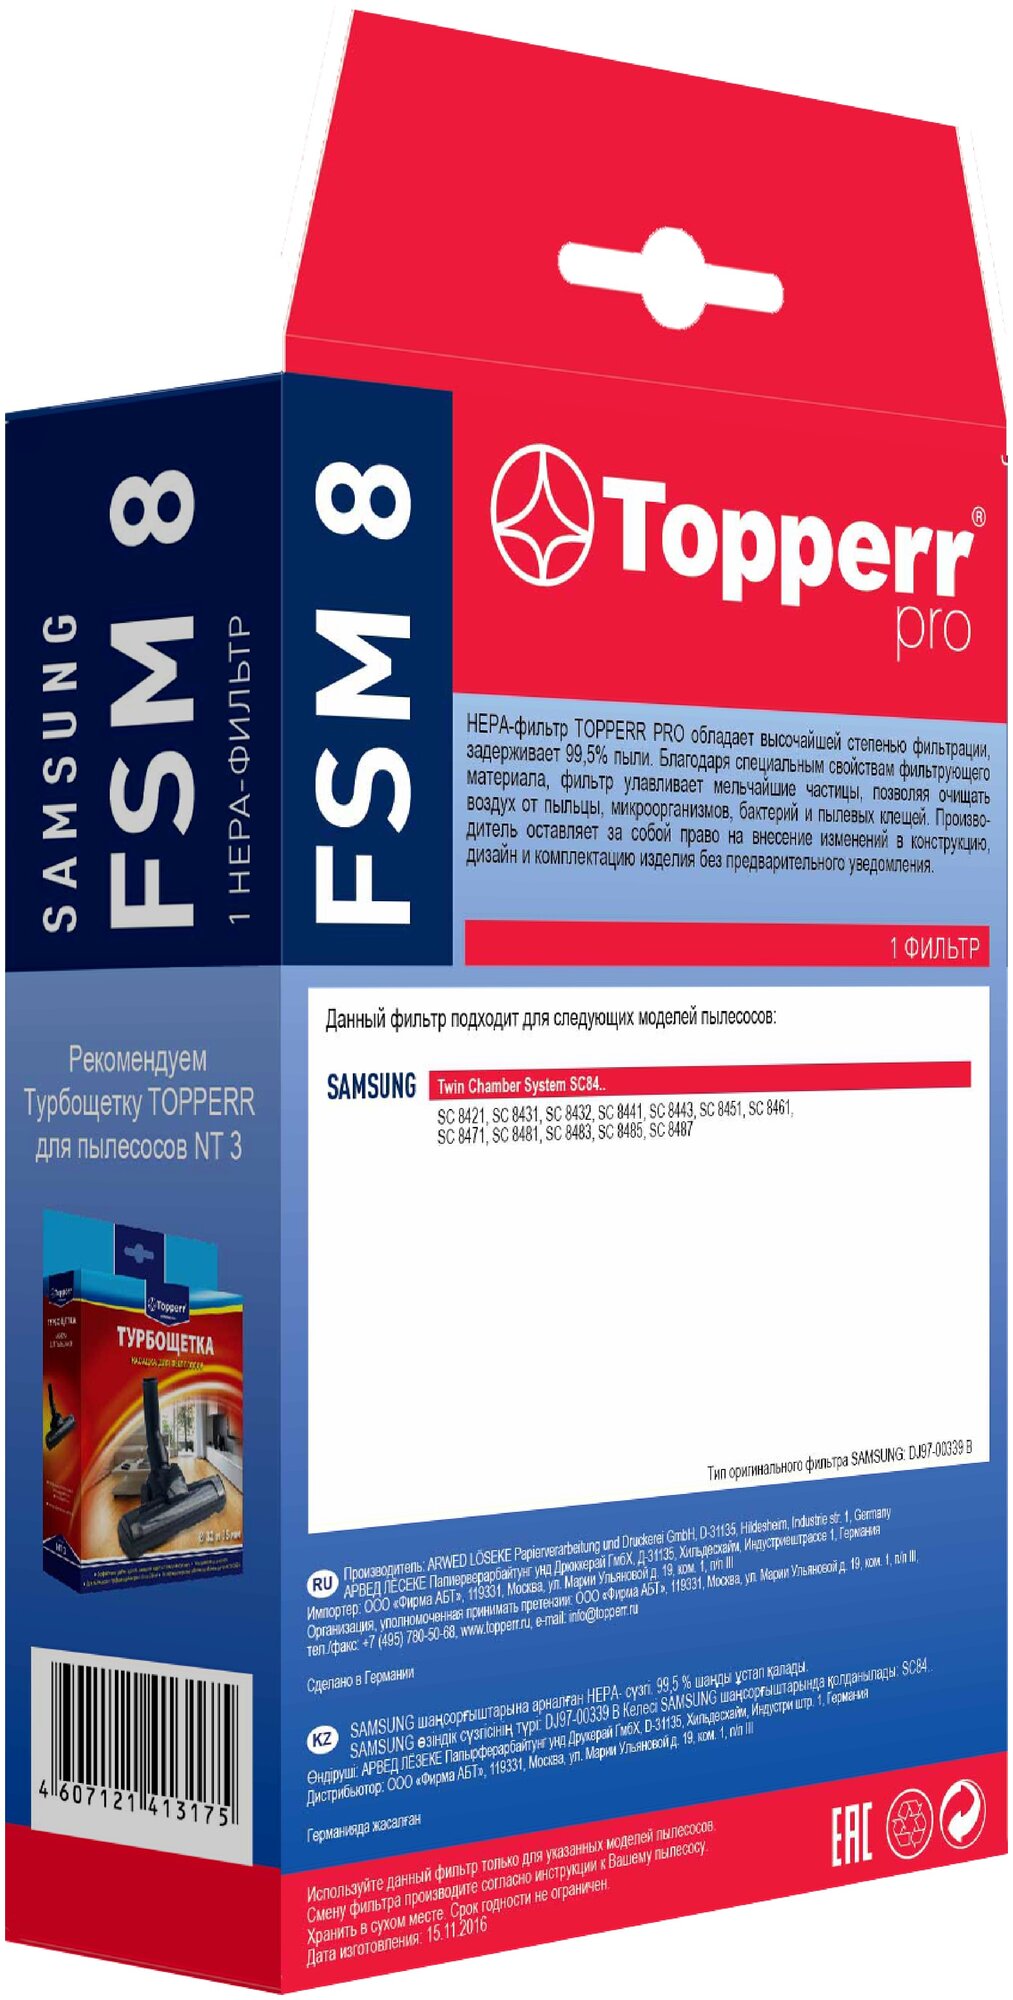 Topperr HEPA-фильтр FSM 8